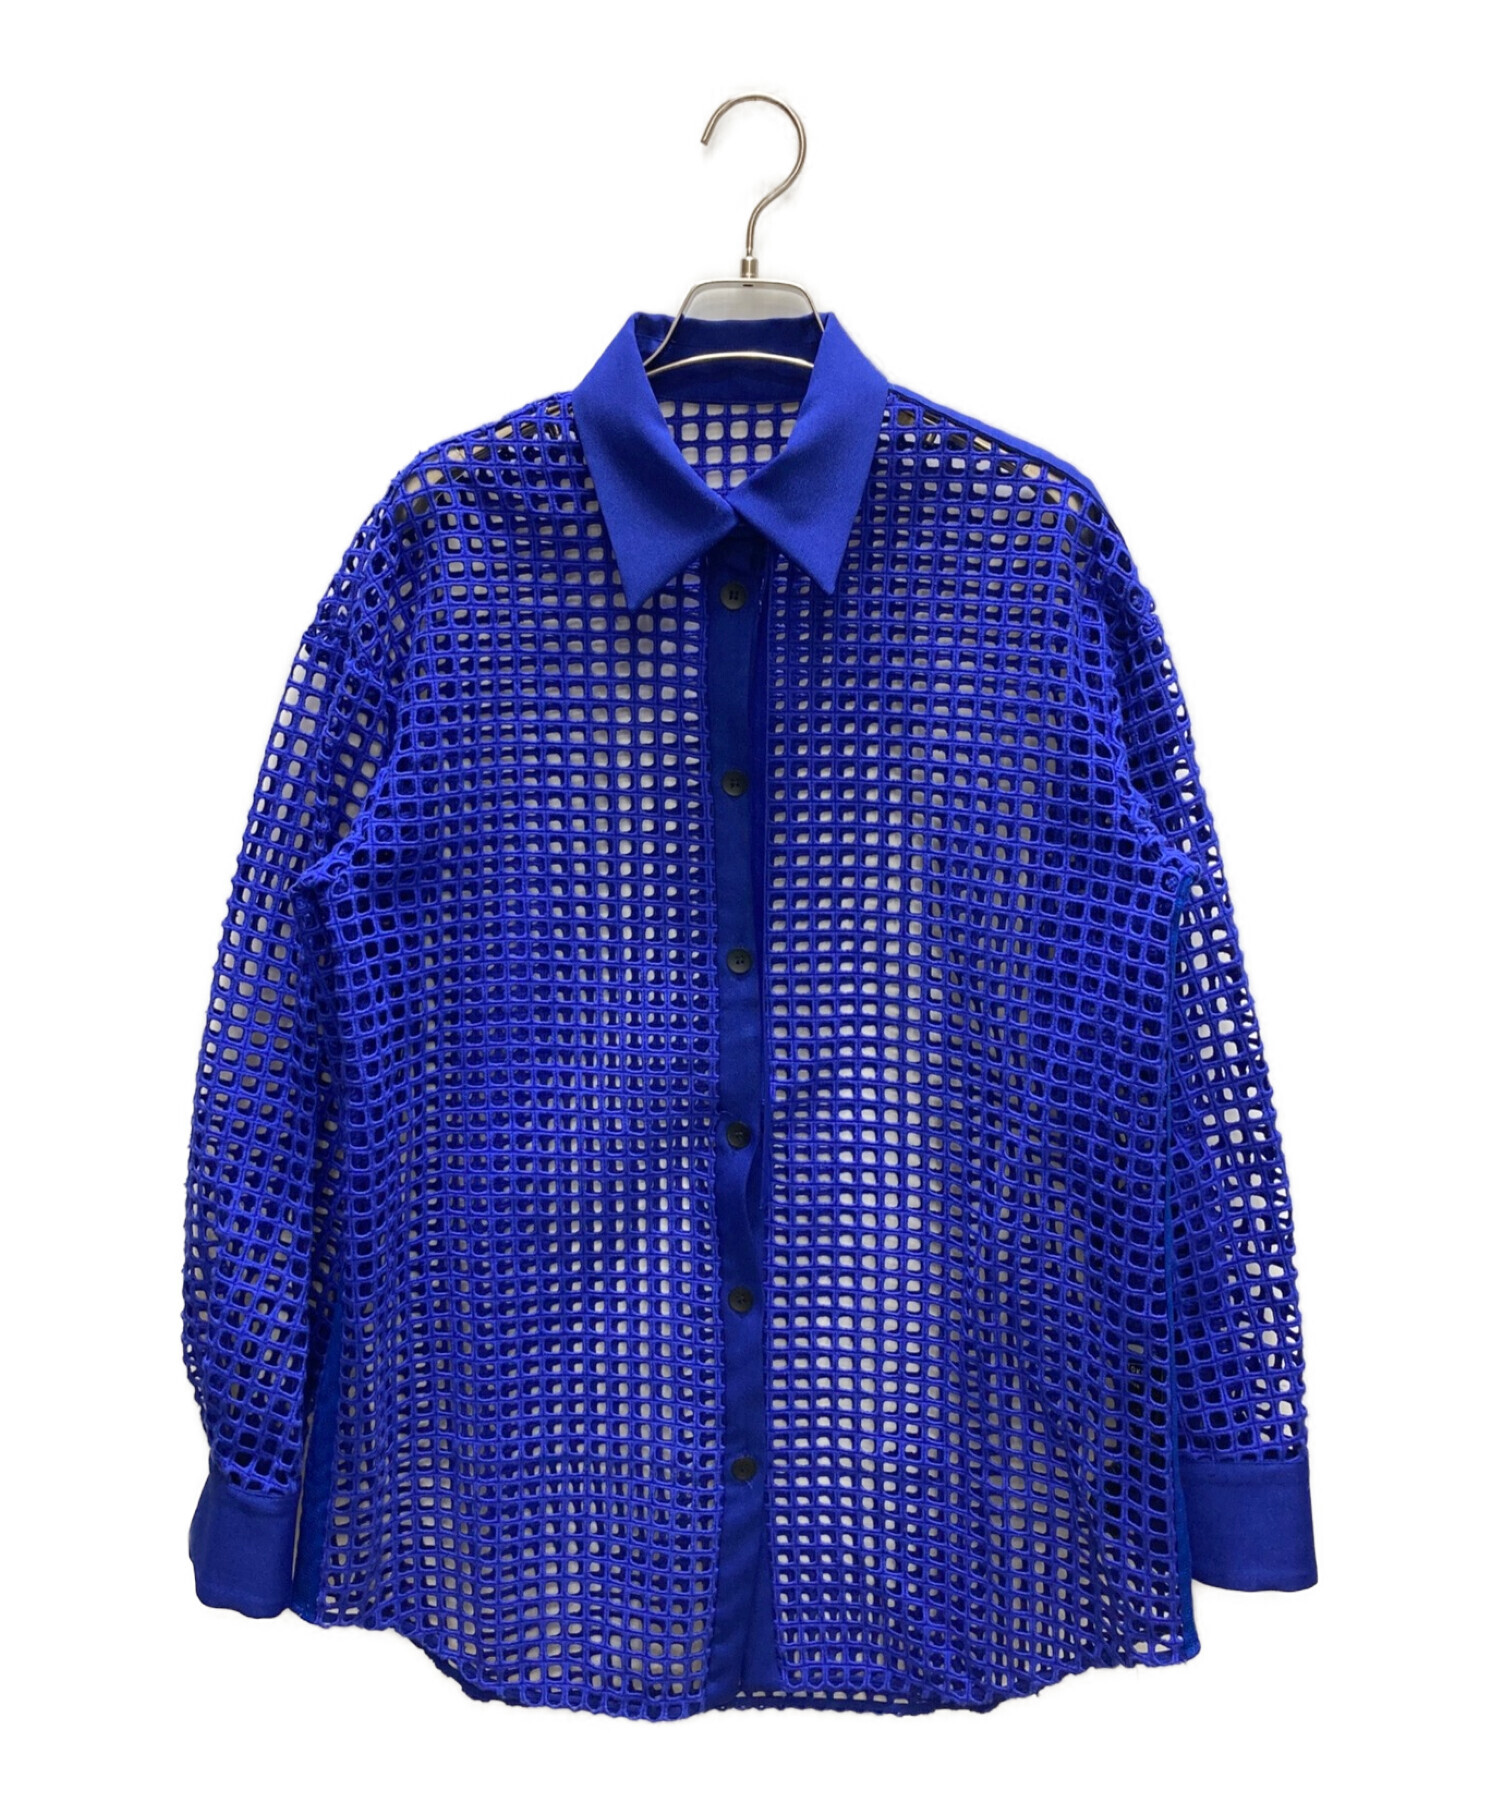 UNITED TOKYO (ユナイテッドトウキョウ) ジオアートメッシュシャツ ブルー サイズ:FREE